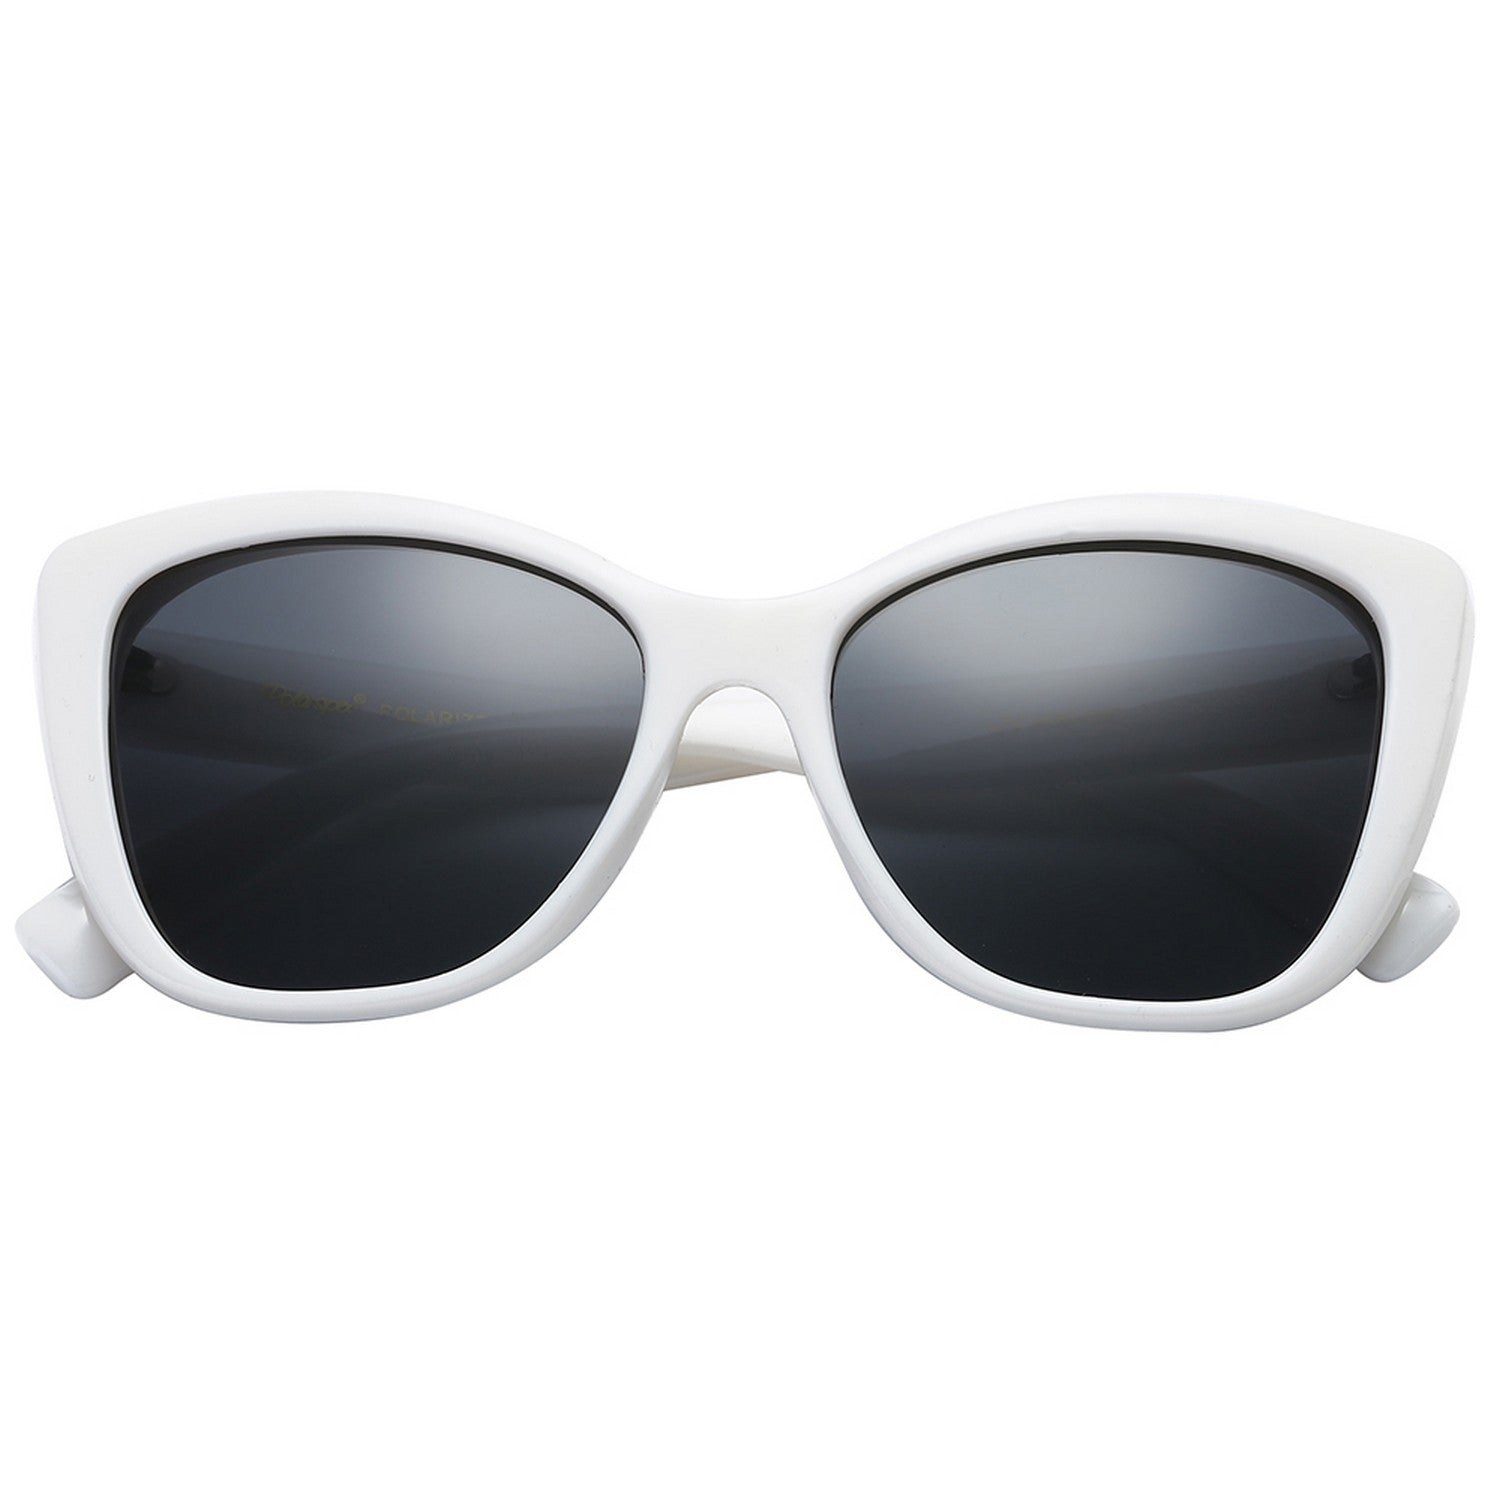 Polarspex Polarized Jackie-O Cat Eyes Style Sunglasses with Ultra White Frames and Polarized Smoke Lenses for Women